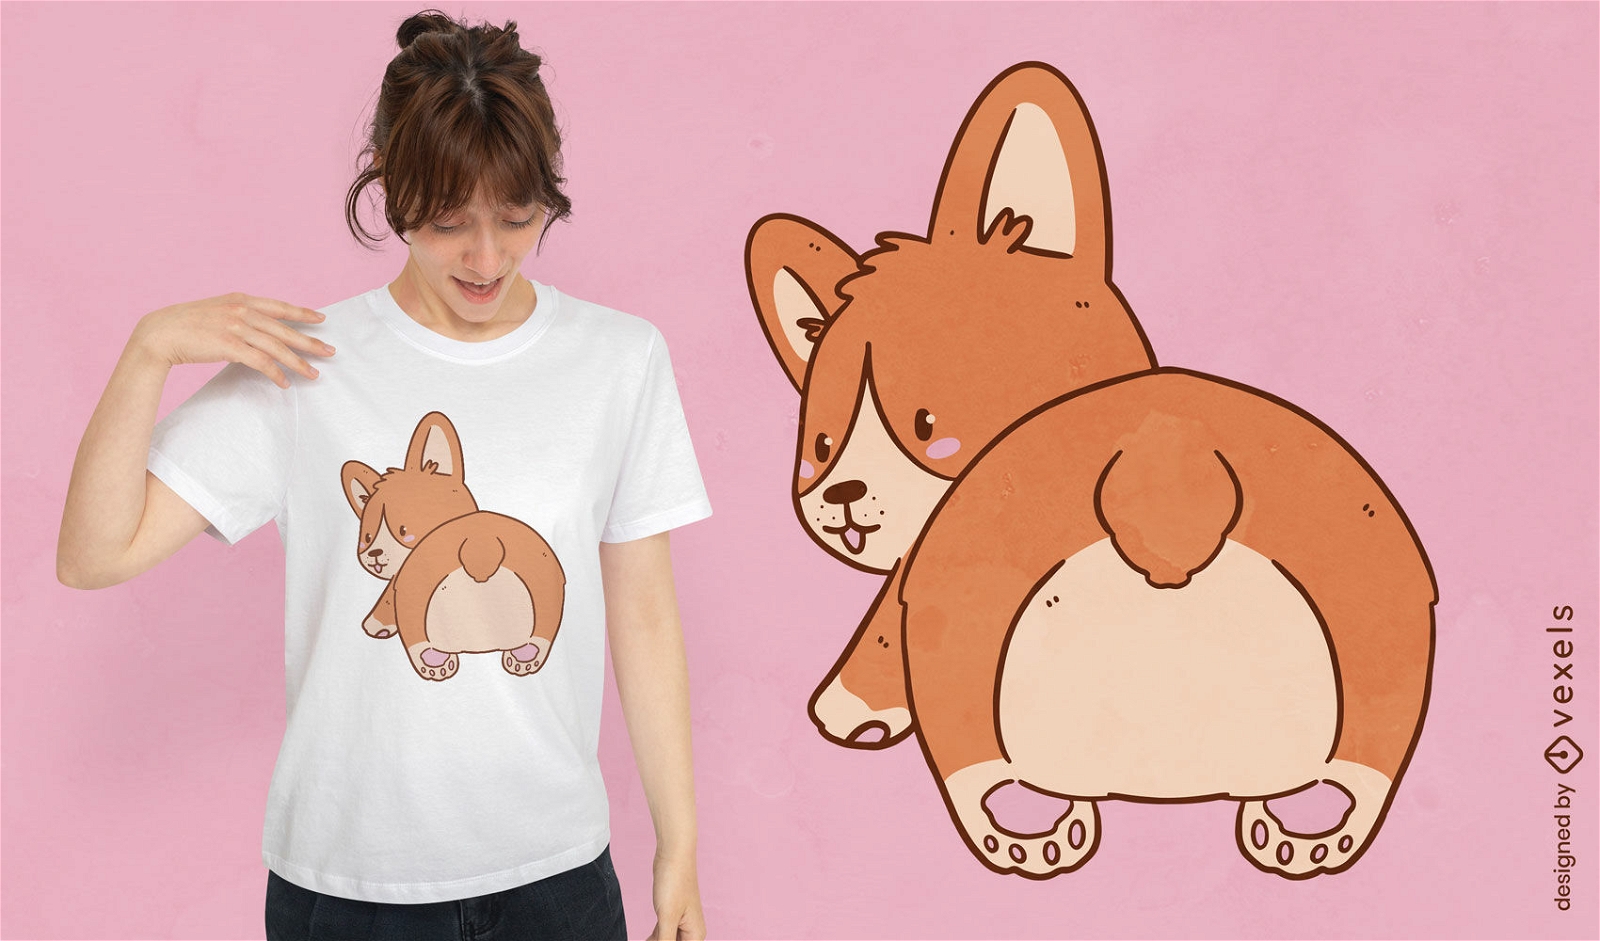 Corgi dog from behind t-shirt design